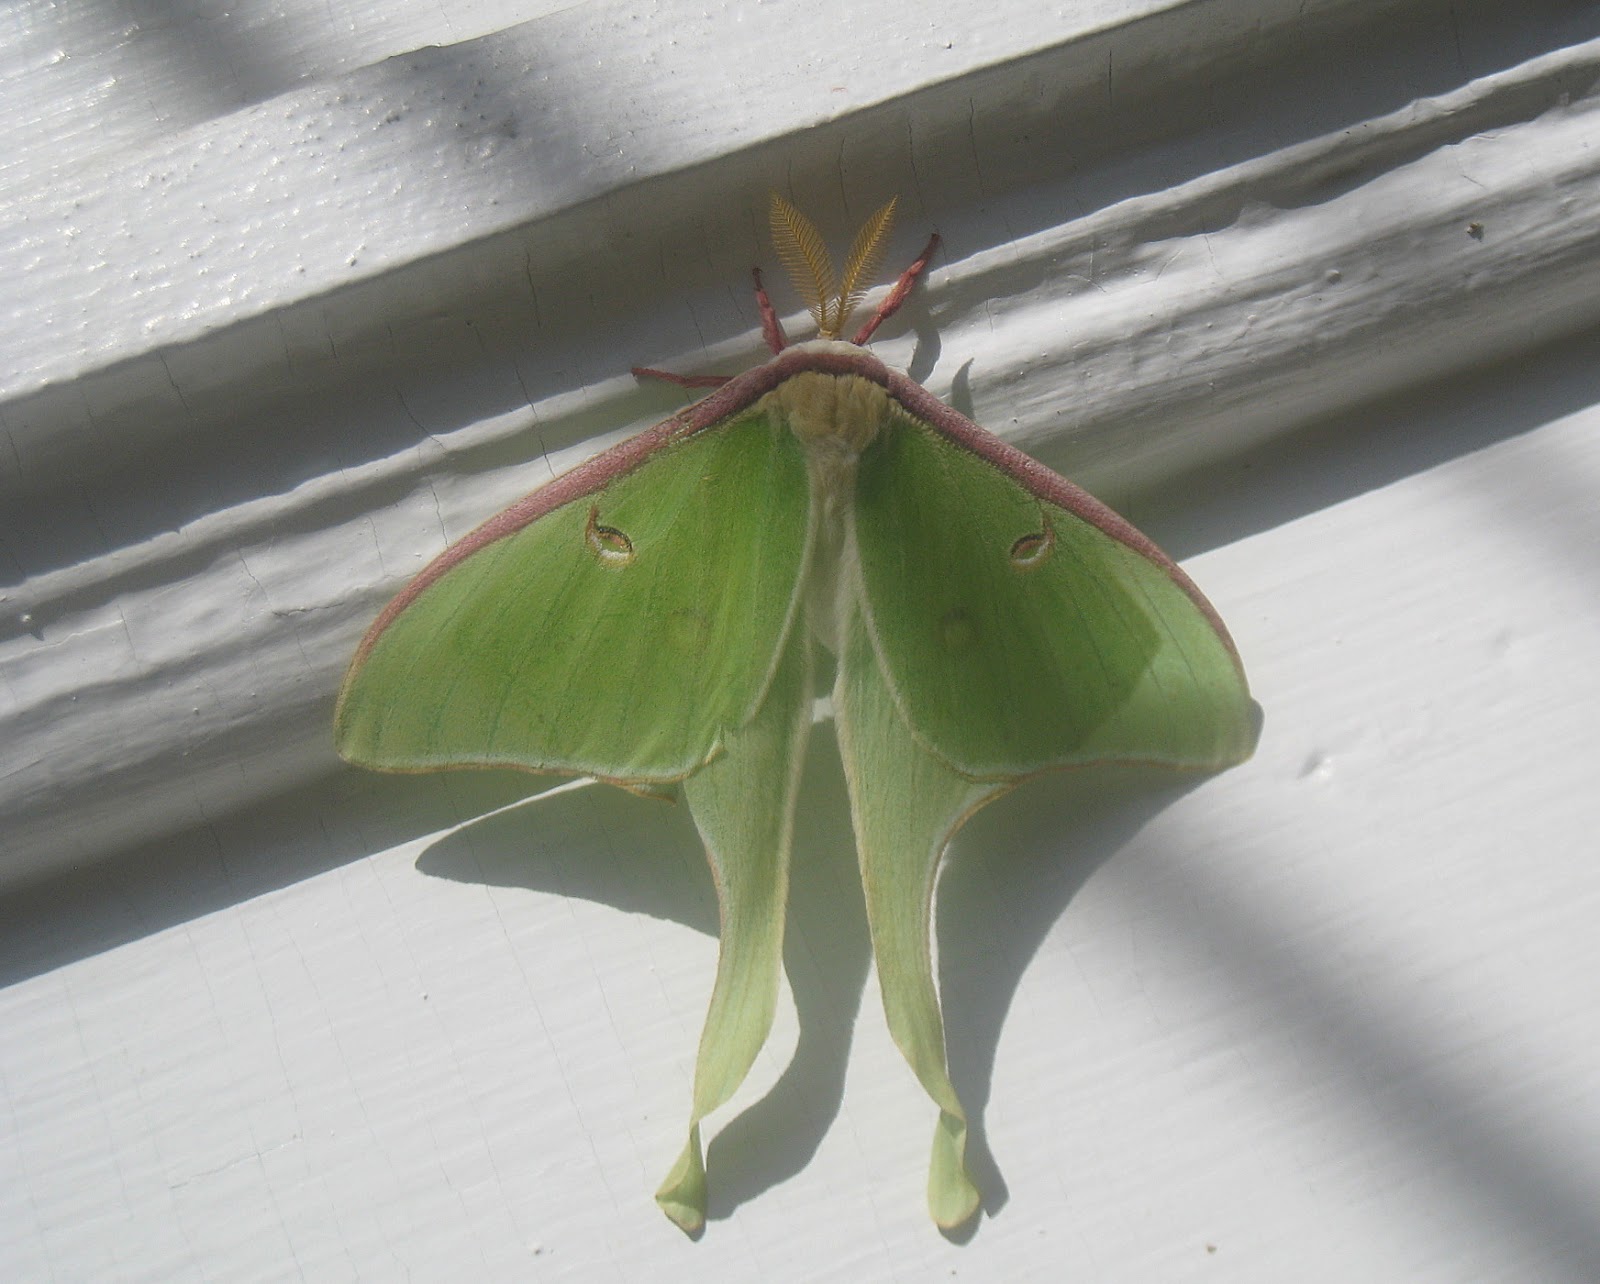 Maynard Life Outdoors and Hidden History of Maynard: Luna Moth: Photo, Symbolism and a Poem